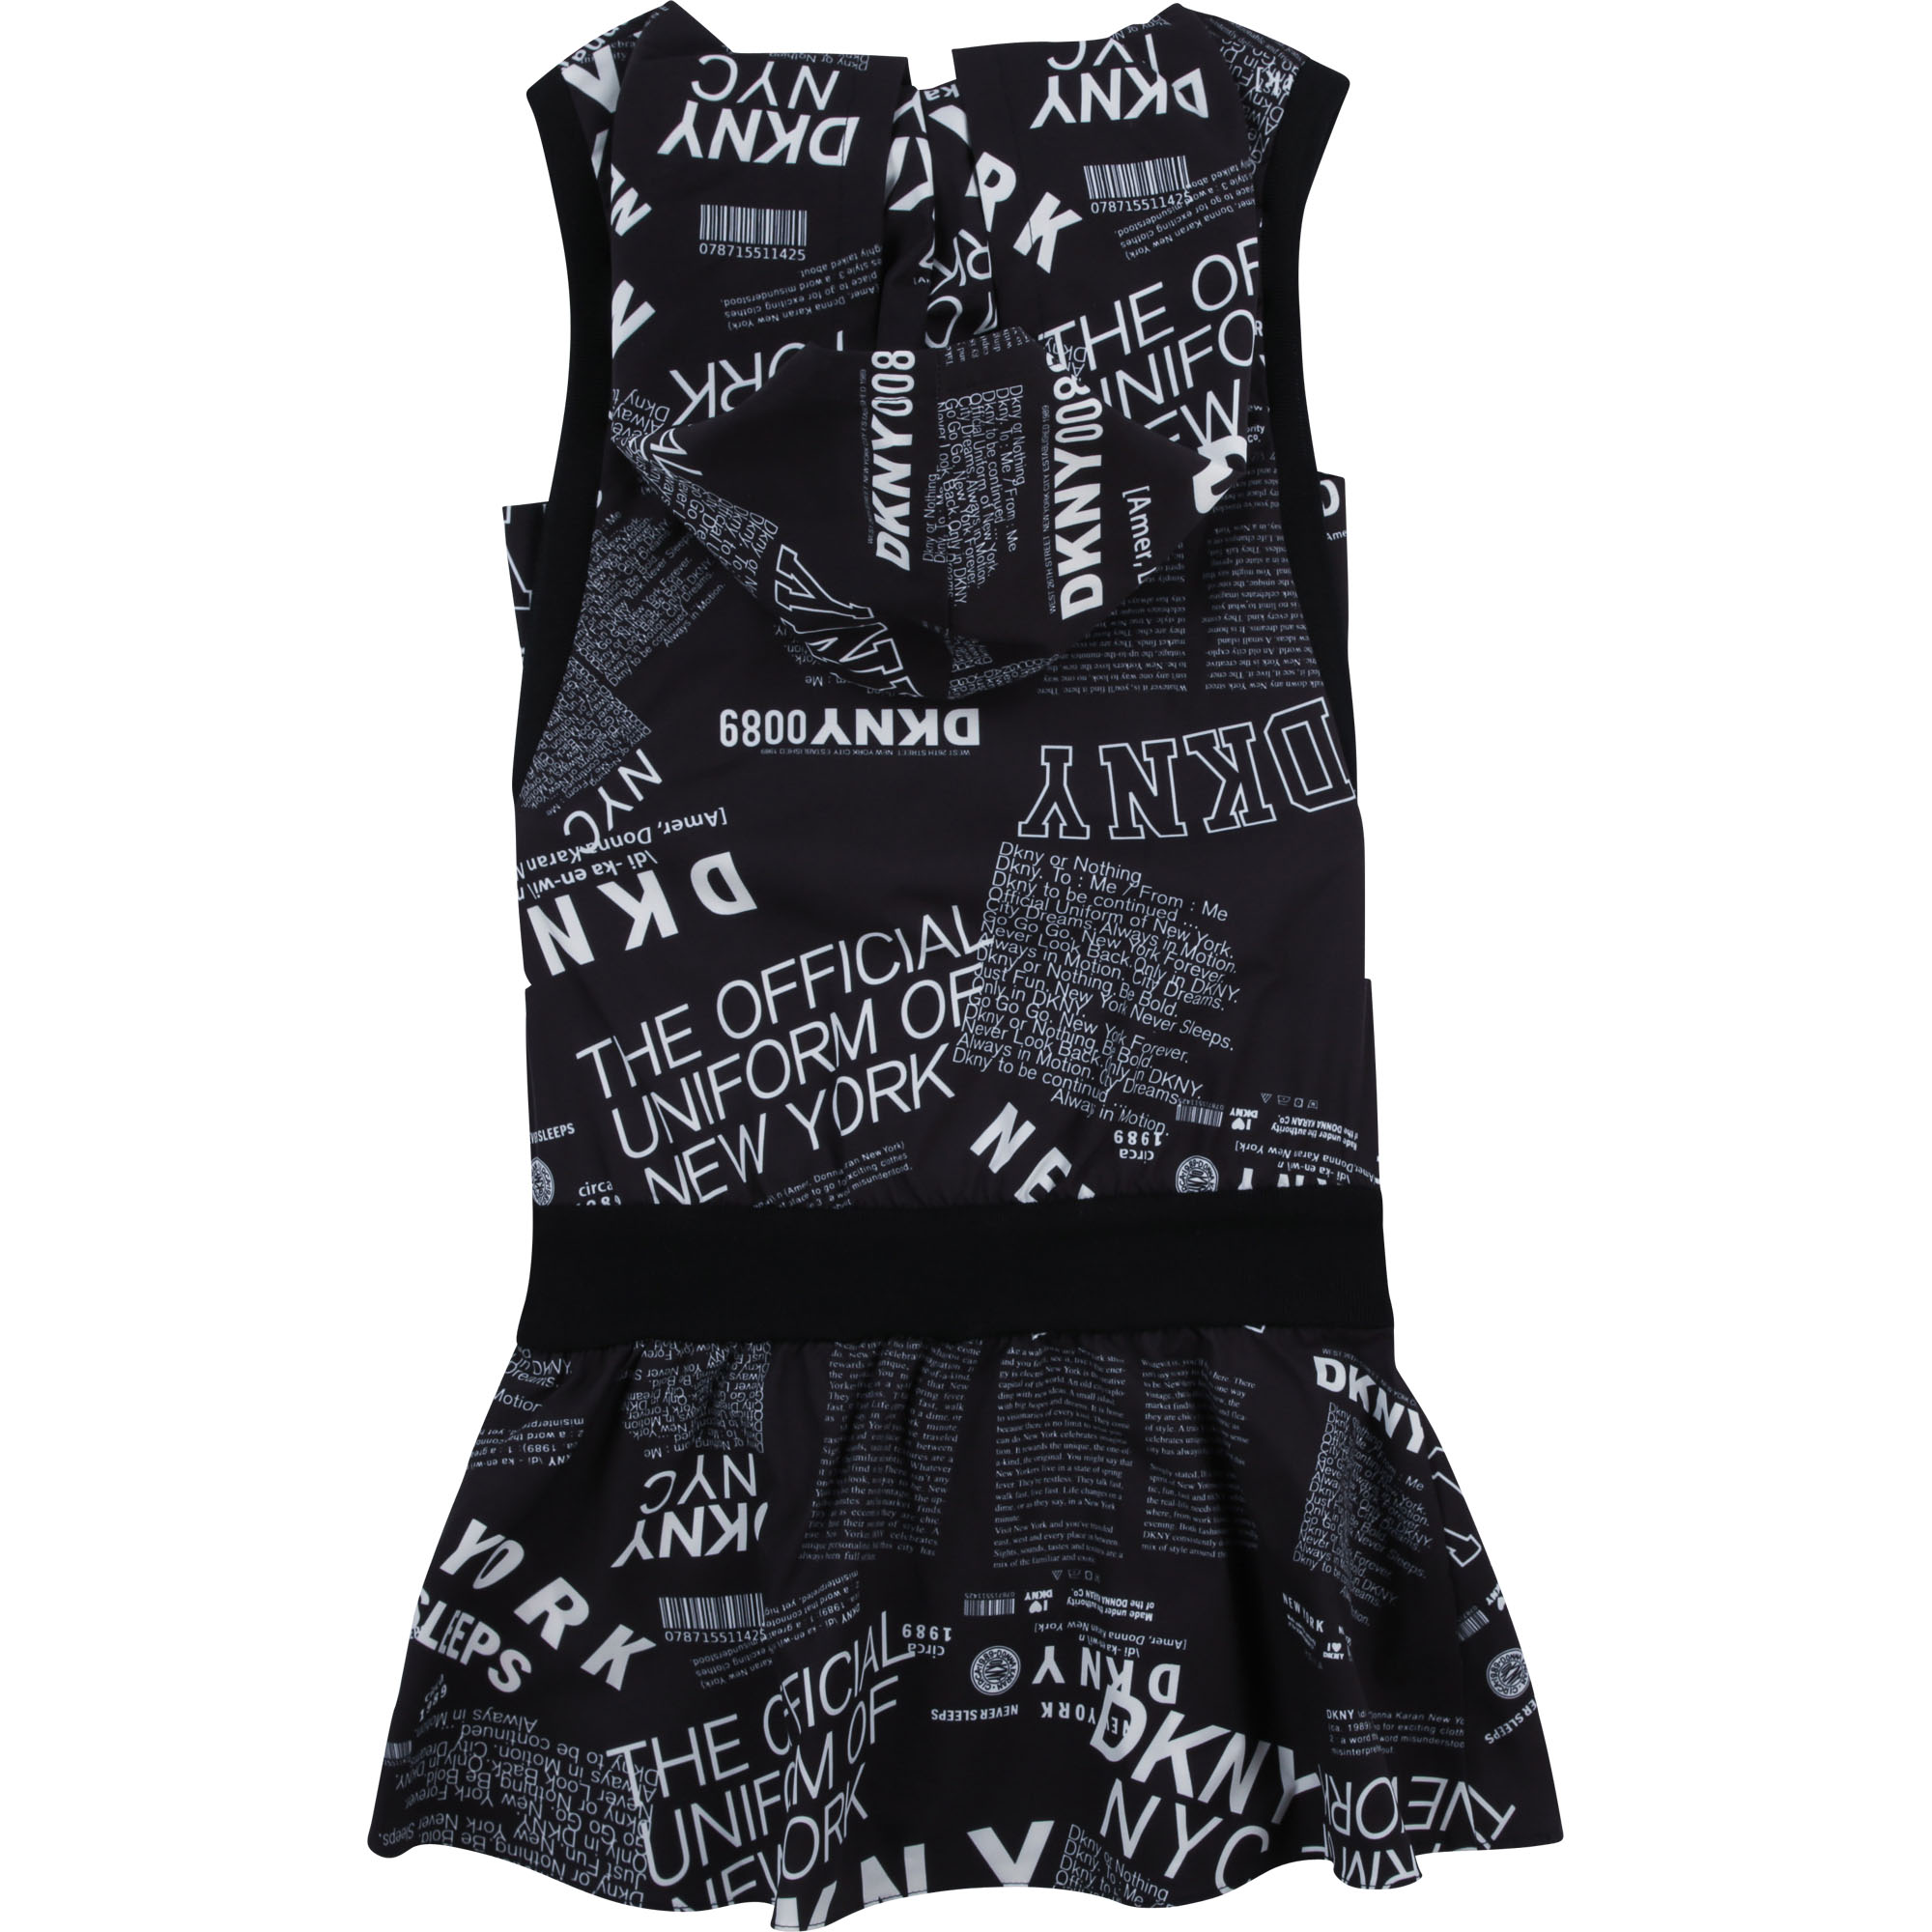 Hooded printed dress DKNY for GIRL